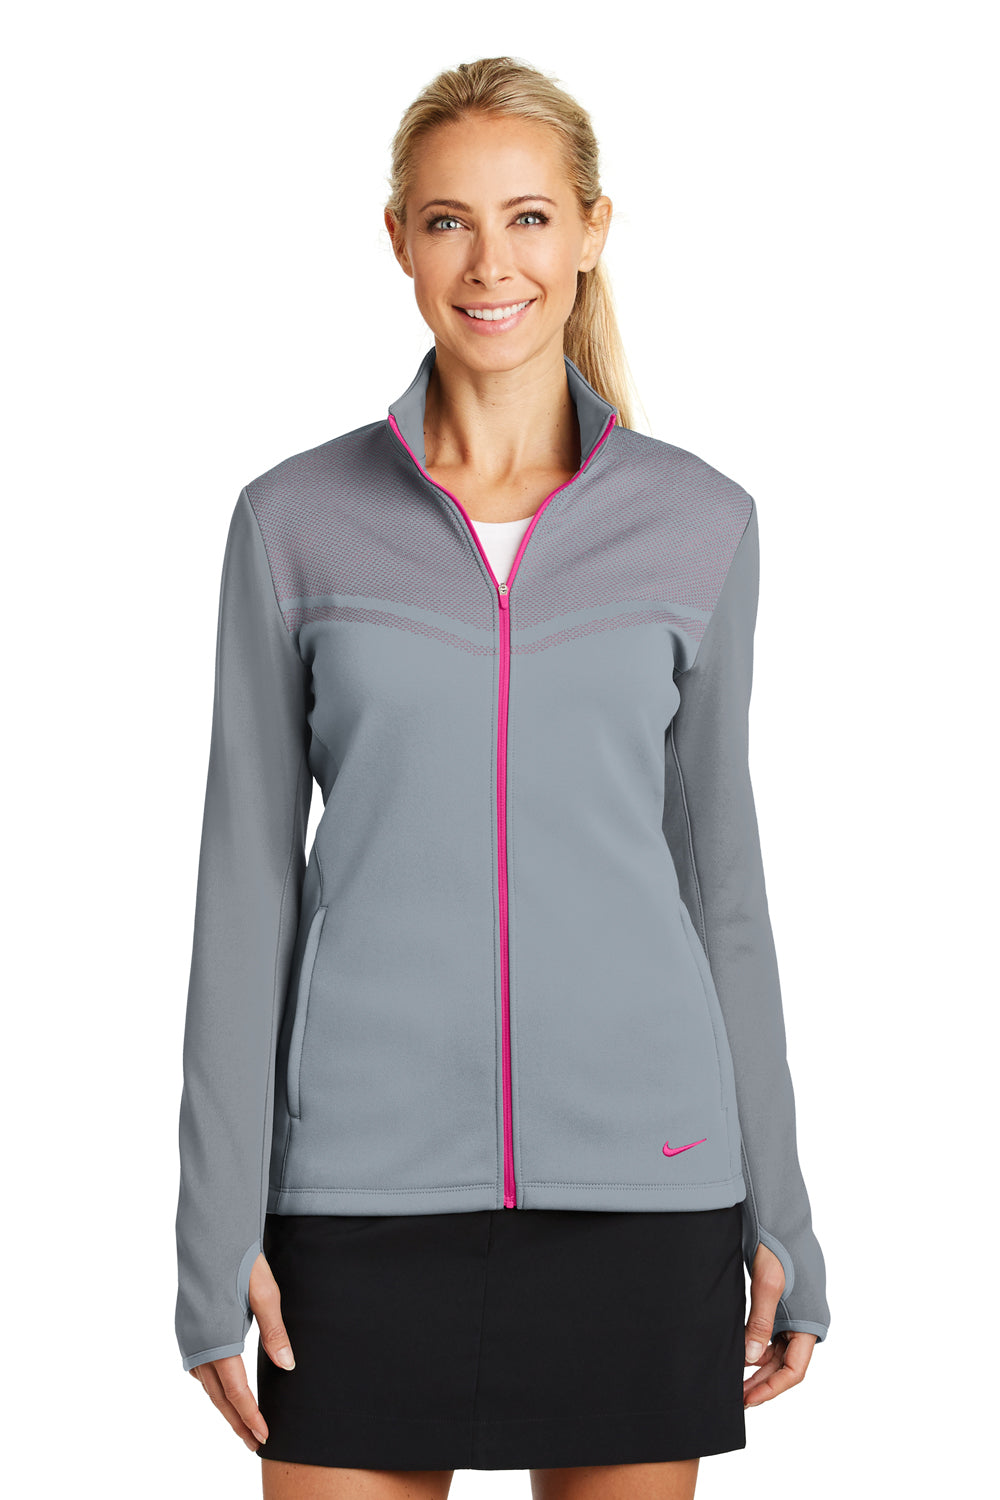 Nike 779804 Womens Hypervis Therma-Fit Moisture Wicking Full Zip Sweatshirt Cool Grey/Vivid Pink Front